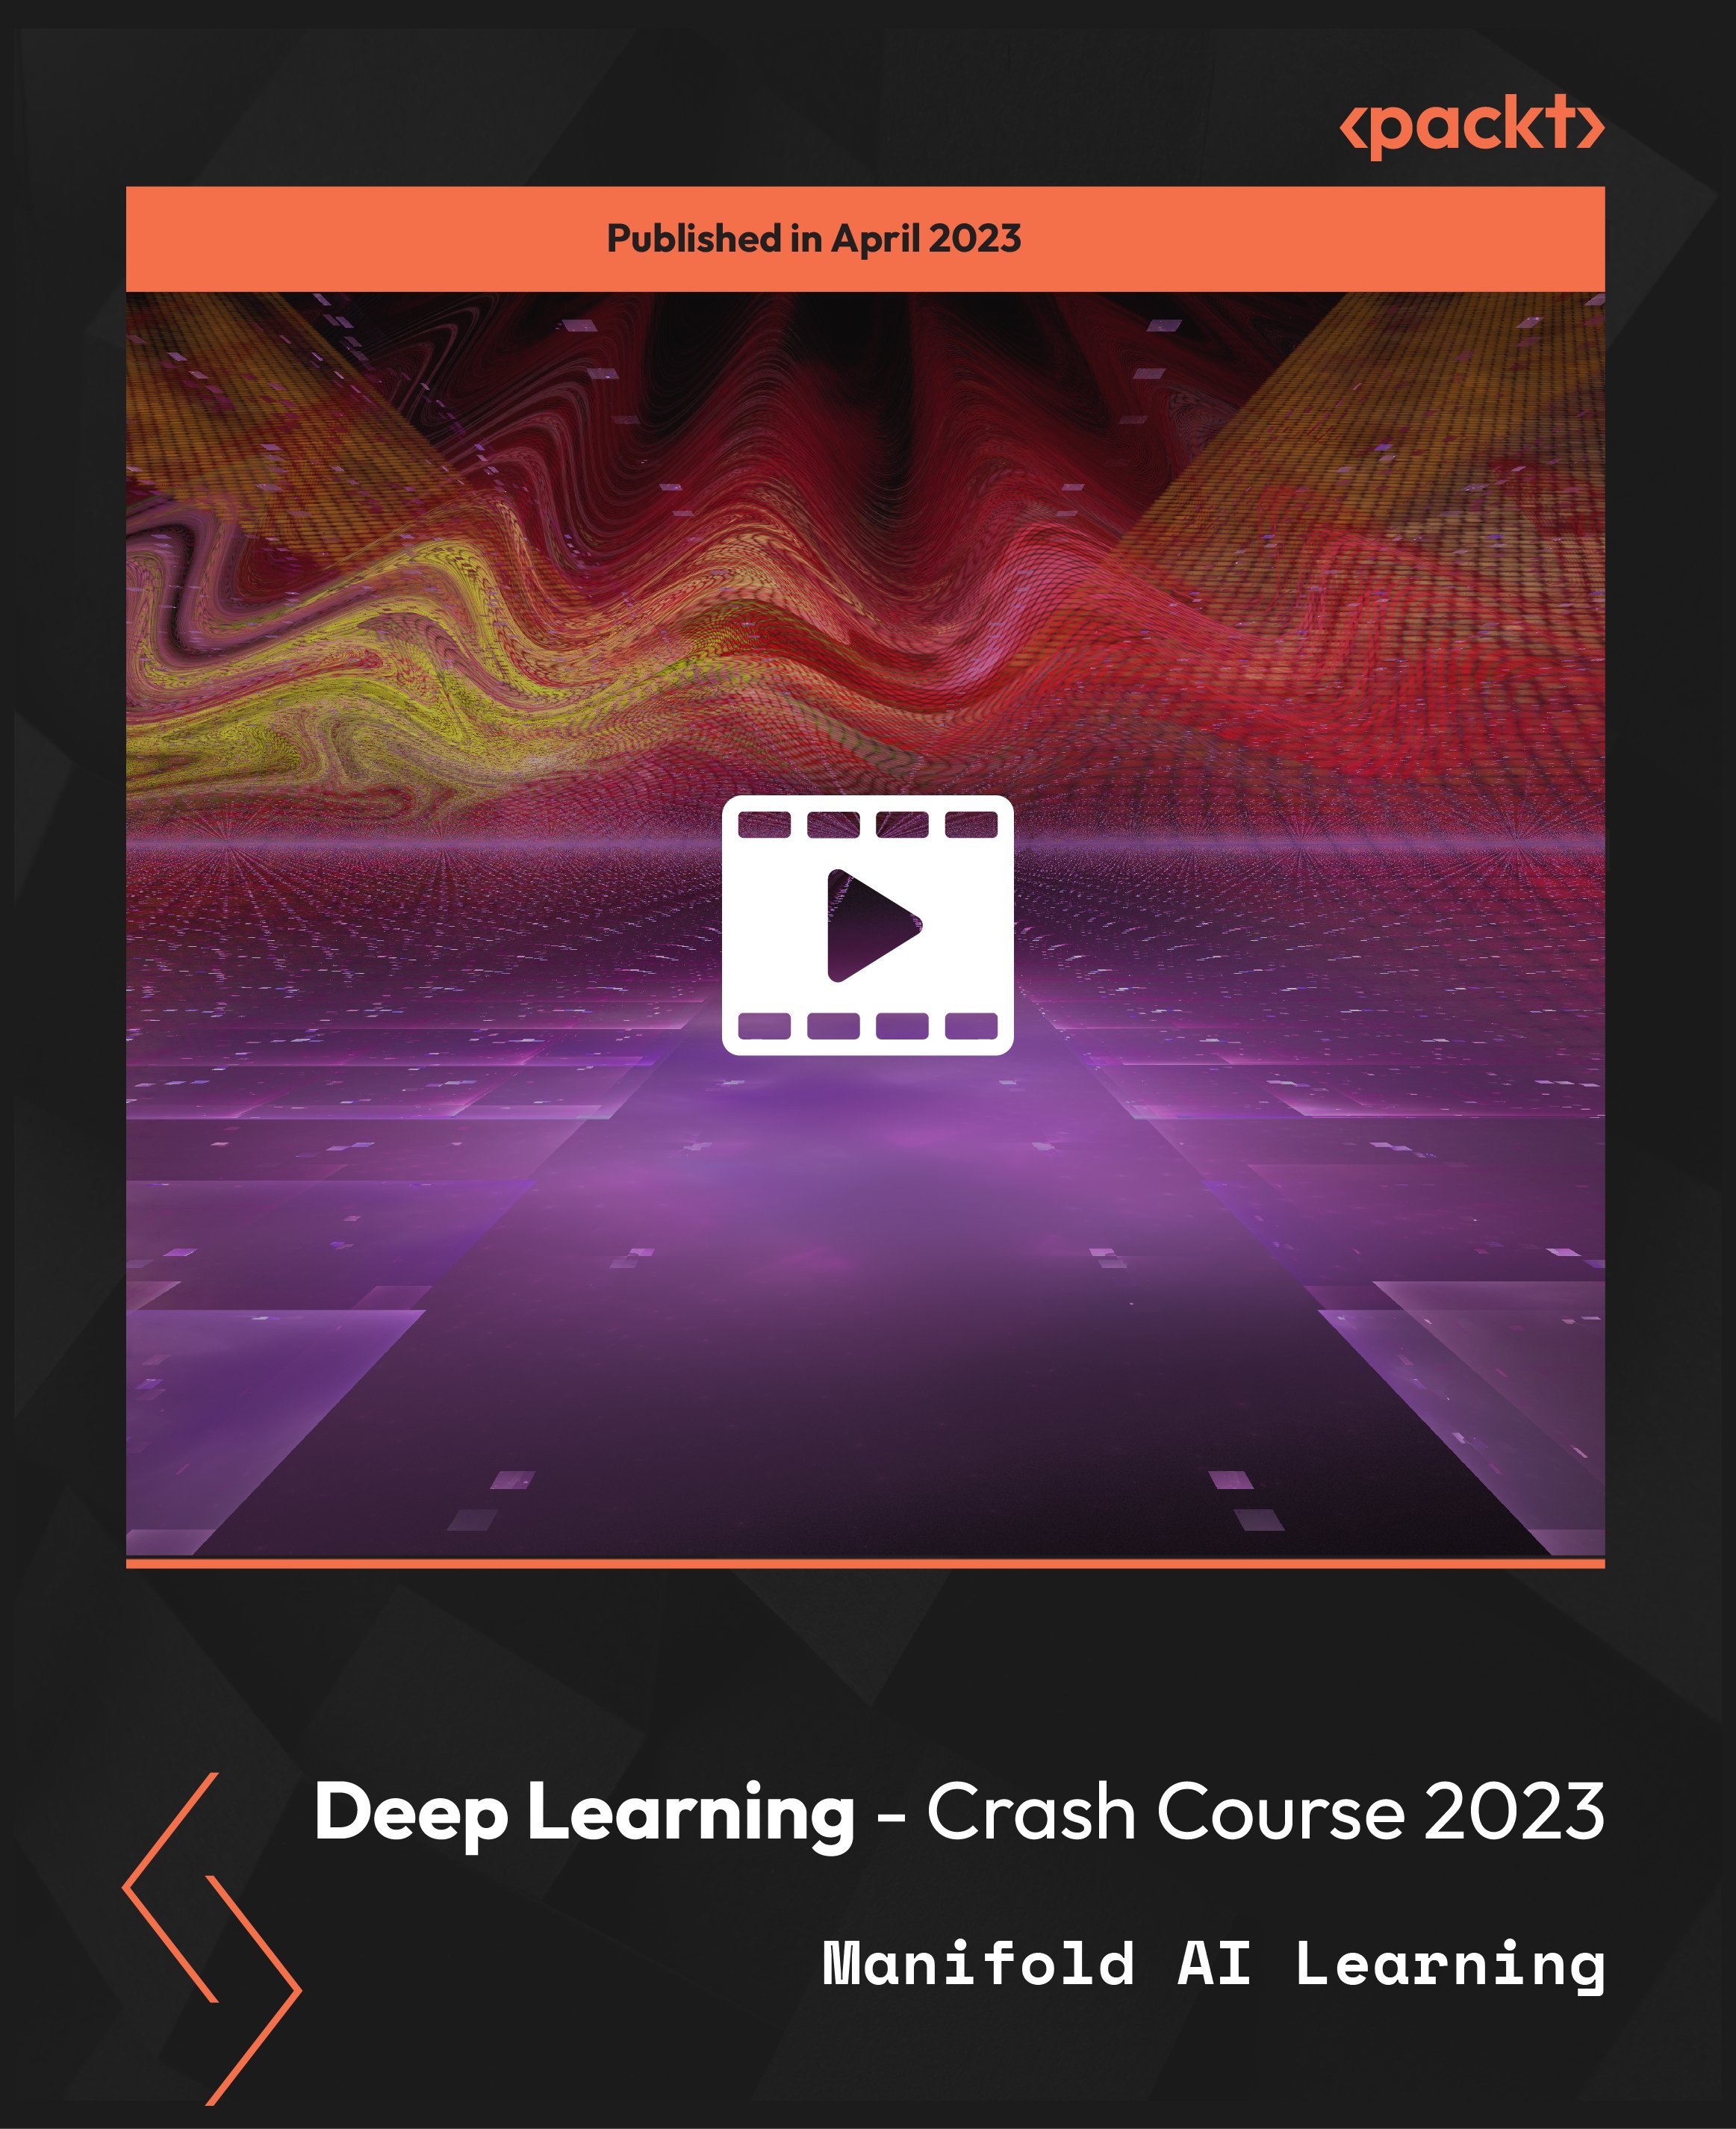 Deep Learning - Crash Course 2023